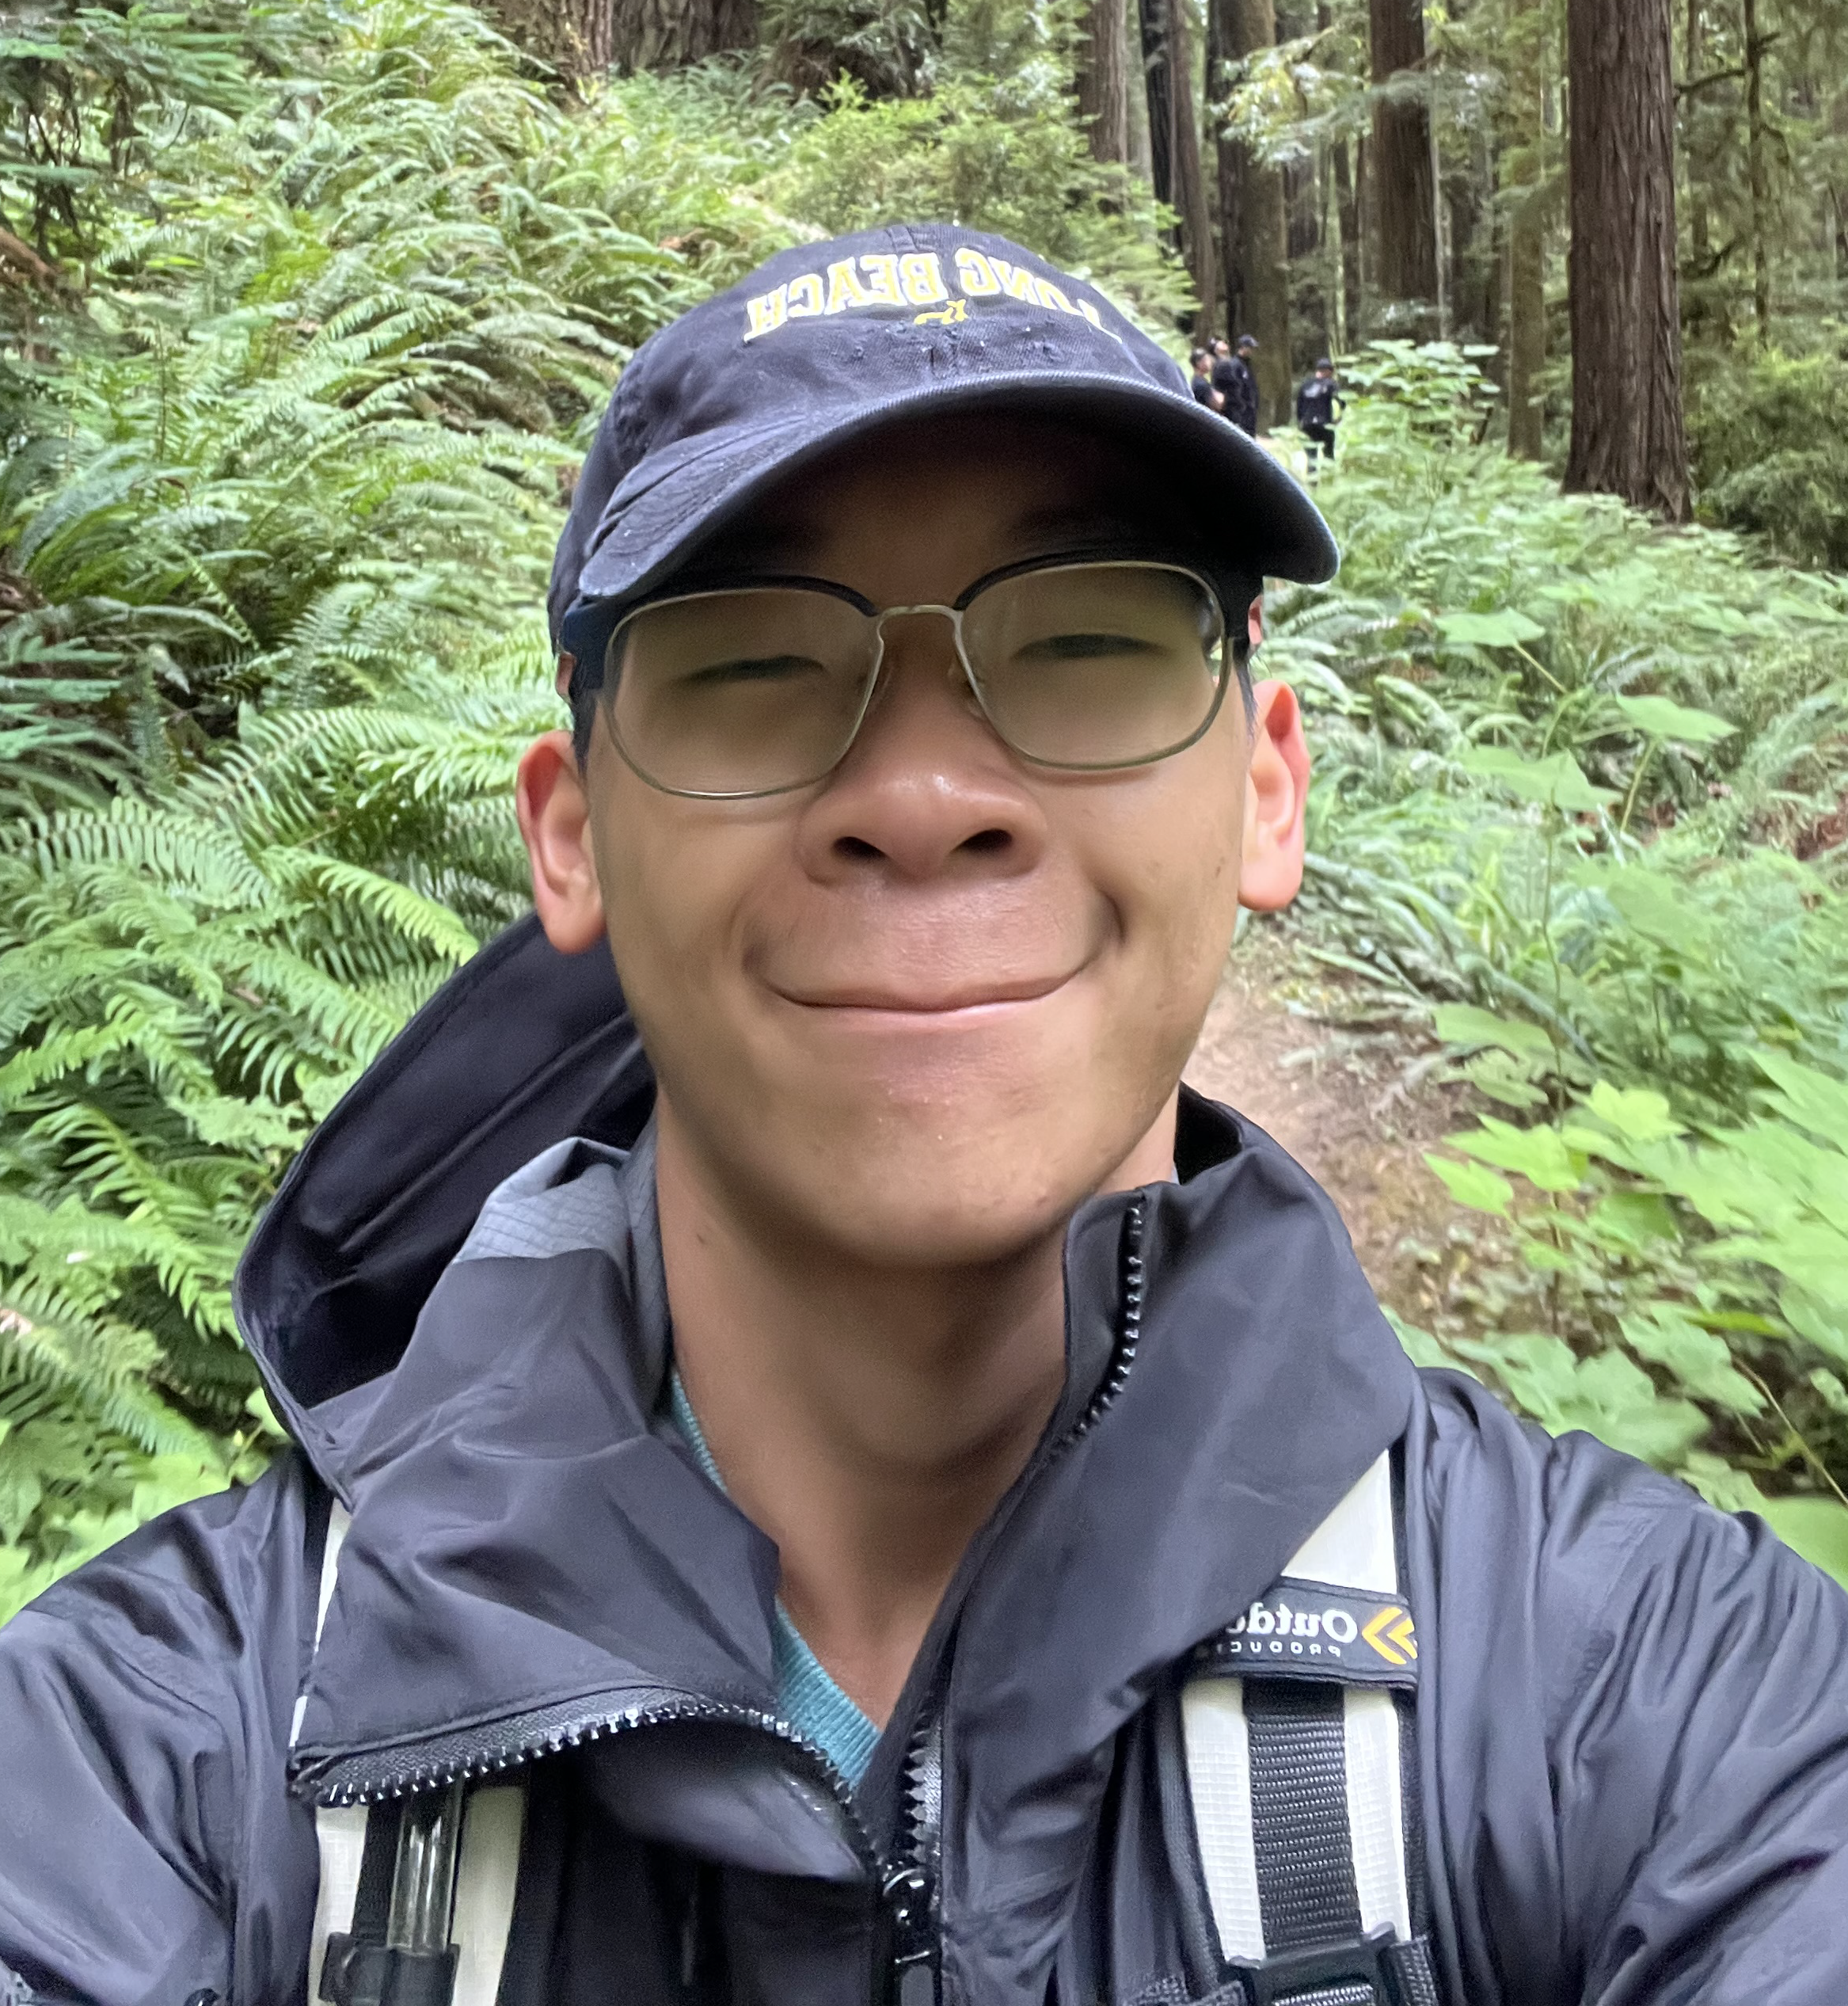 A photo taken of Harrison Nguyen on a hike outdoors.